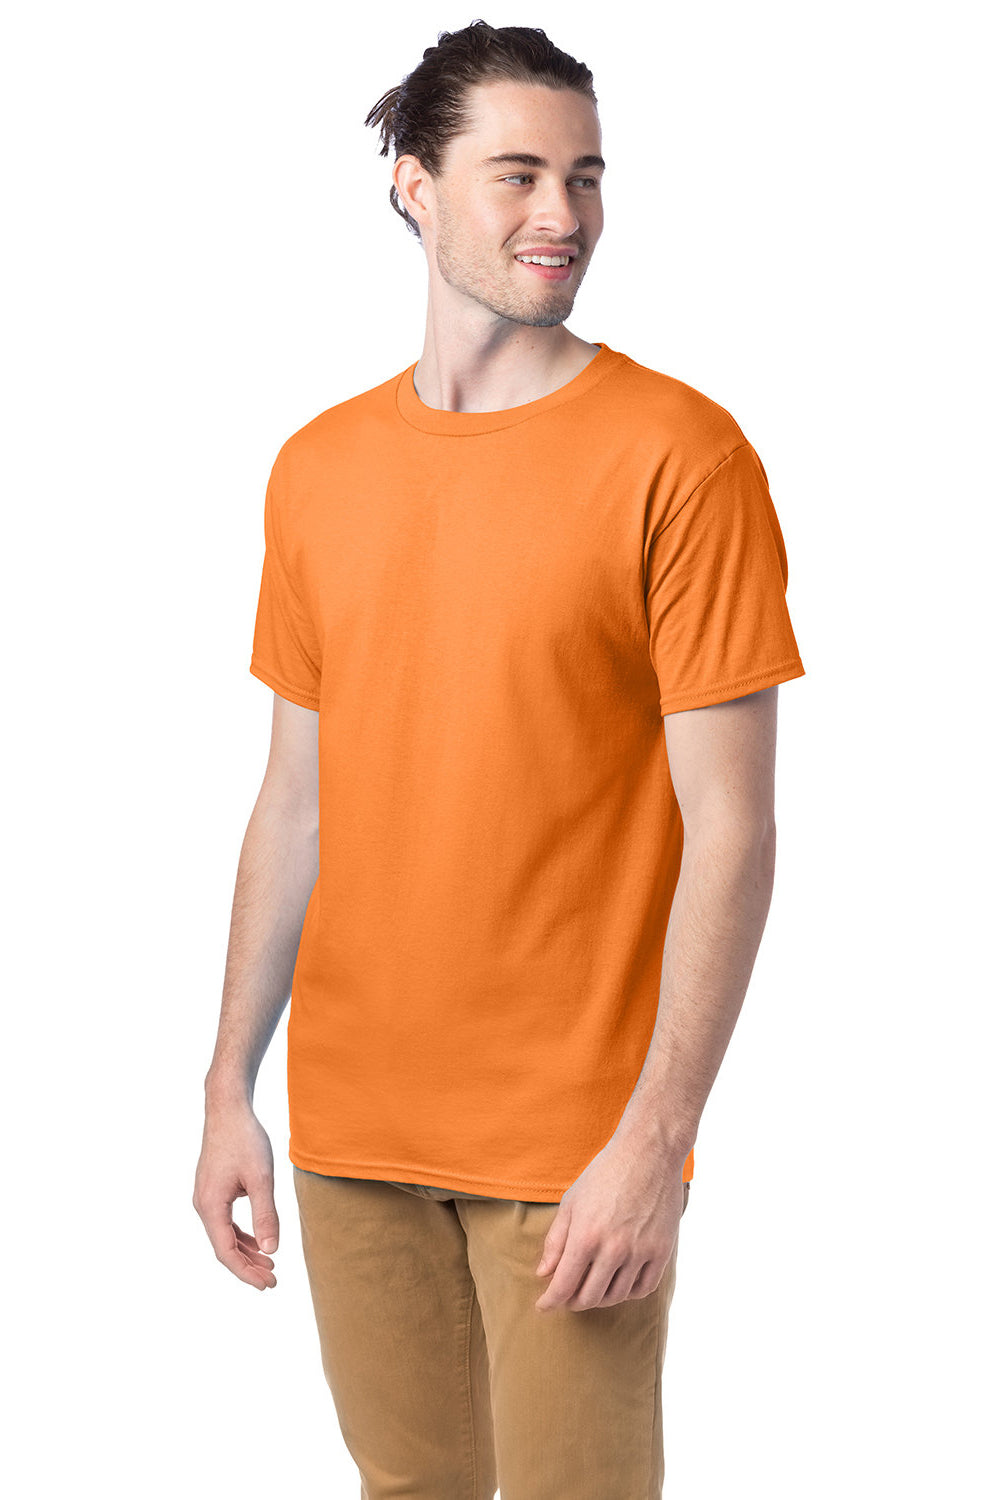 Hanes 5280 Mens ComfortSoft Short Sleeve Crewneck T-Shirt Tennessee Orange 3Q